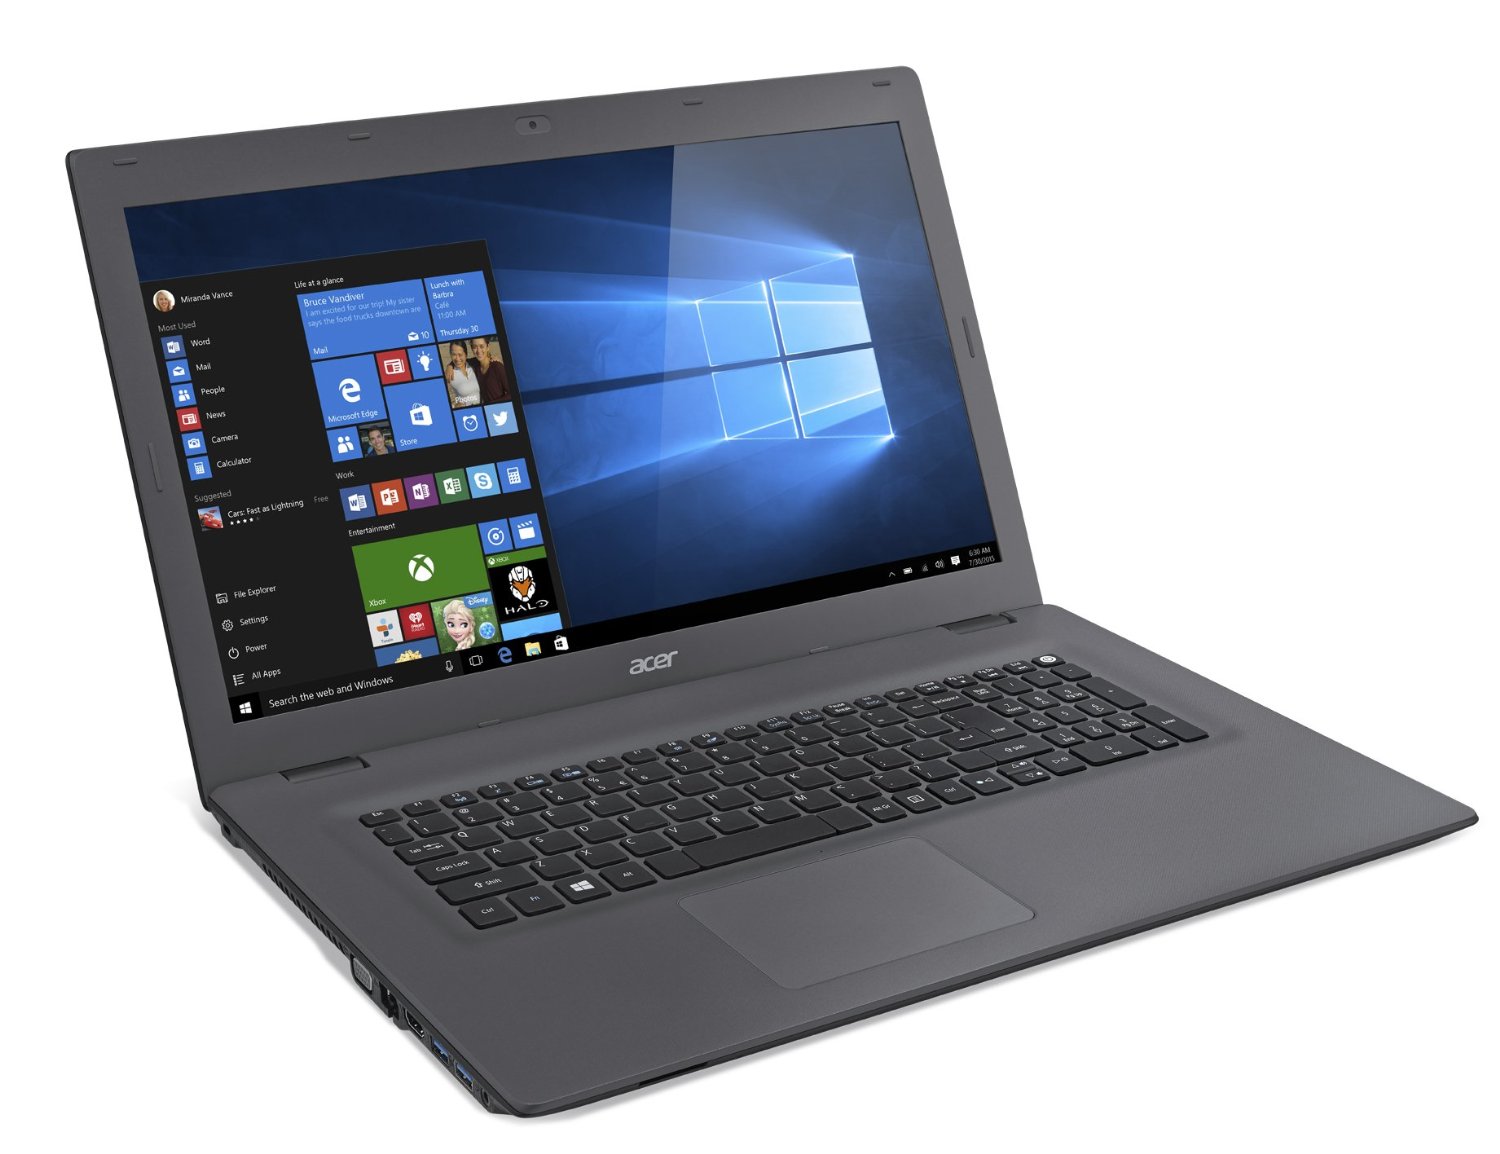 Acer Aspire E 17 E5-773G-5464 17.3-inch Full HD Notebook